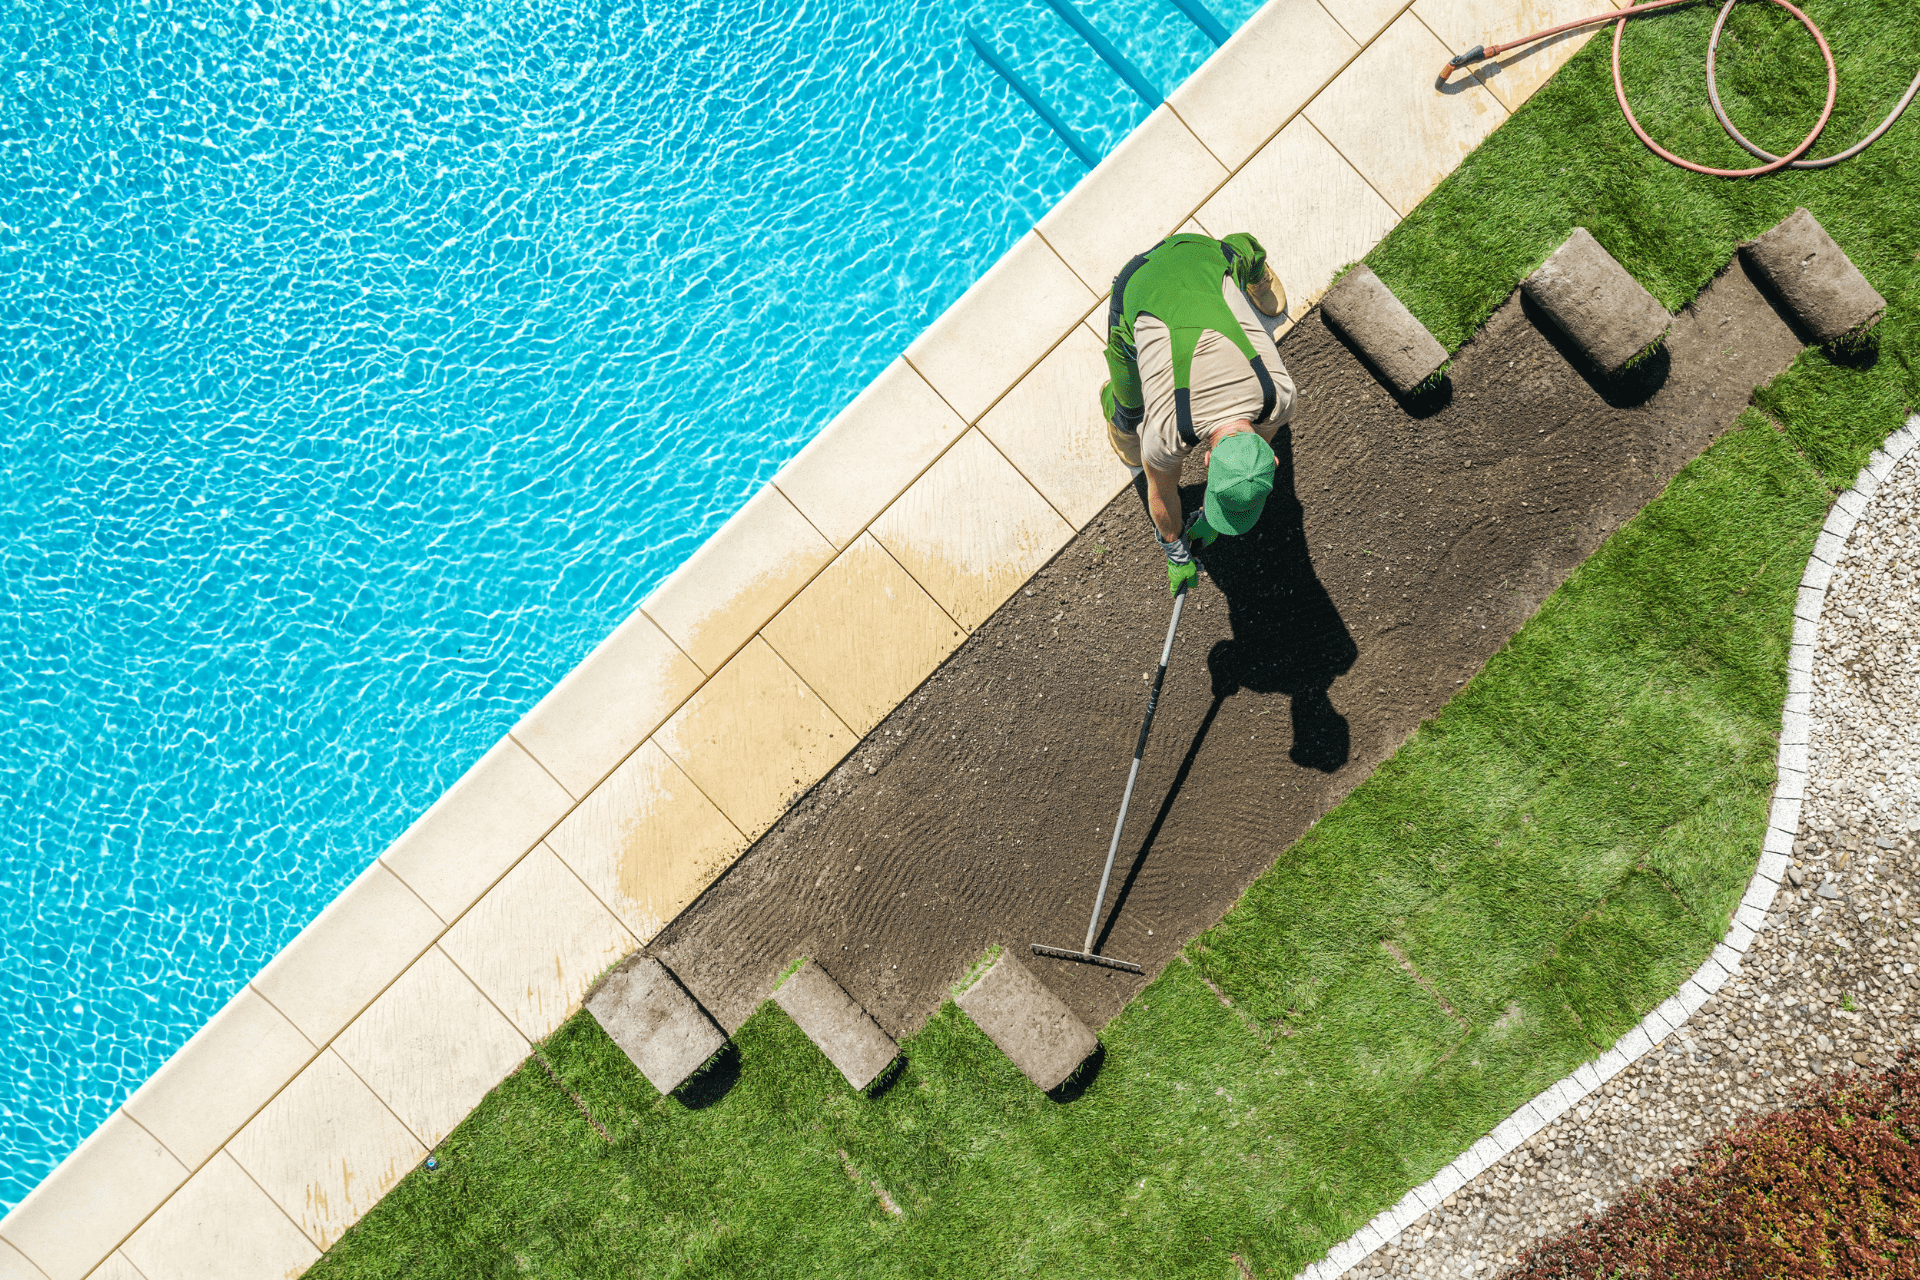 Landscaper raking the soil before installating new grass turfs around the swimming pool